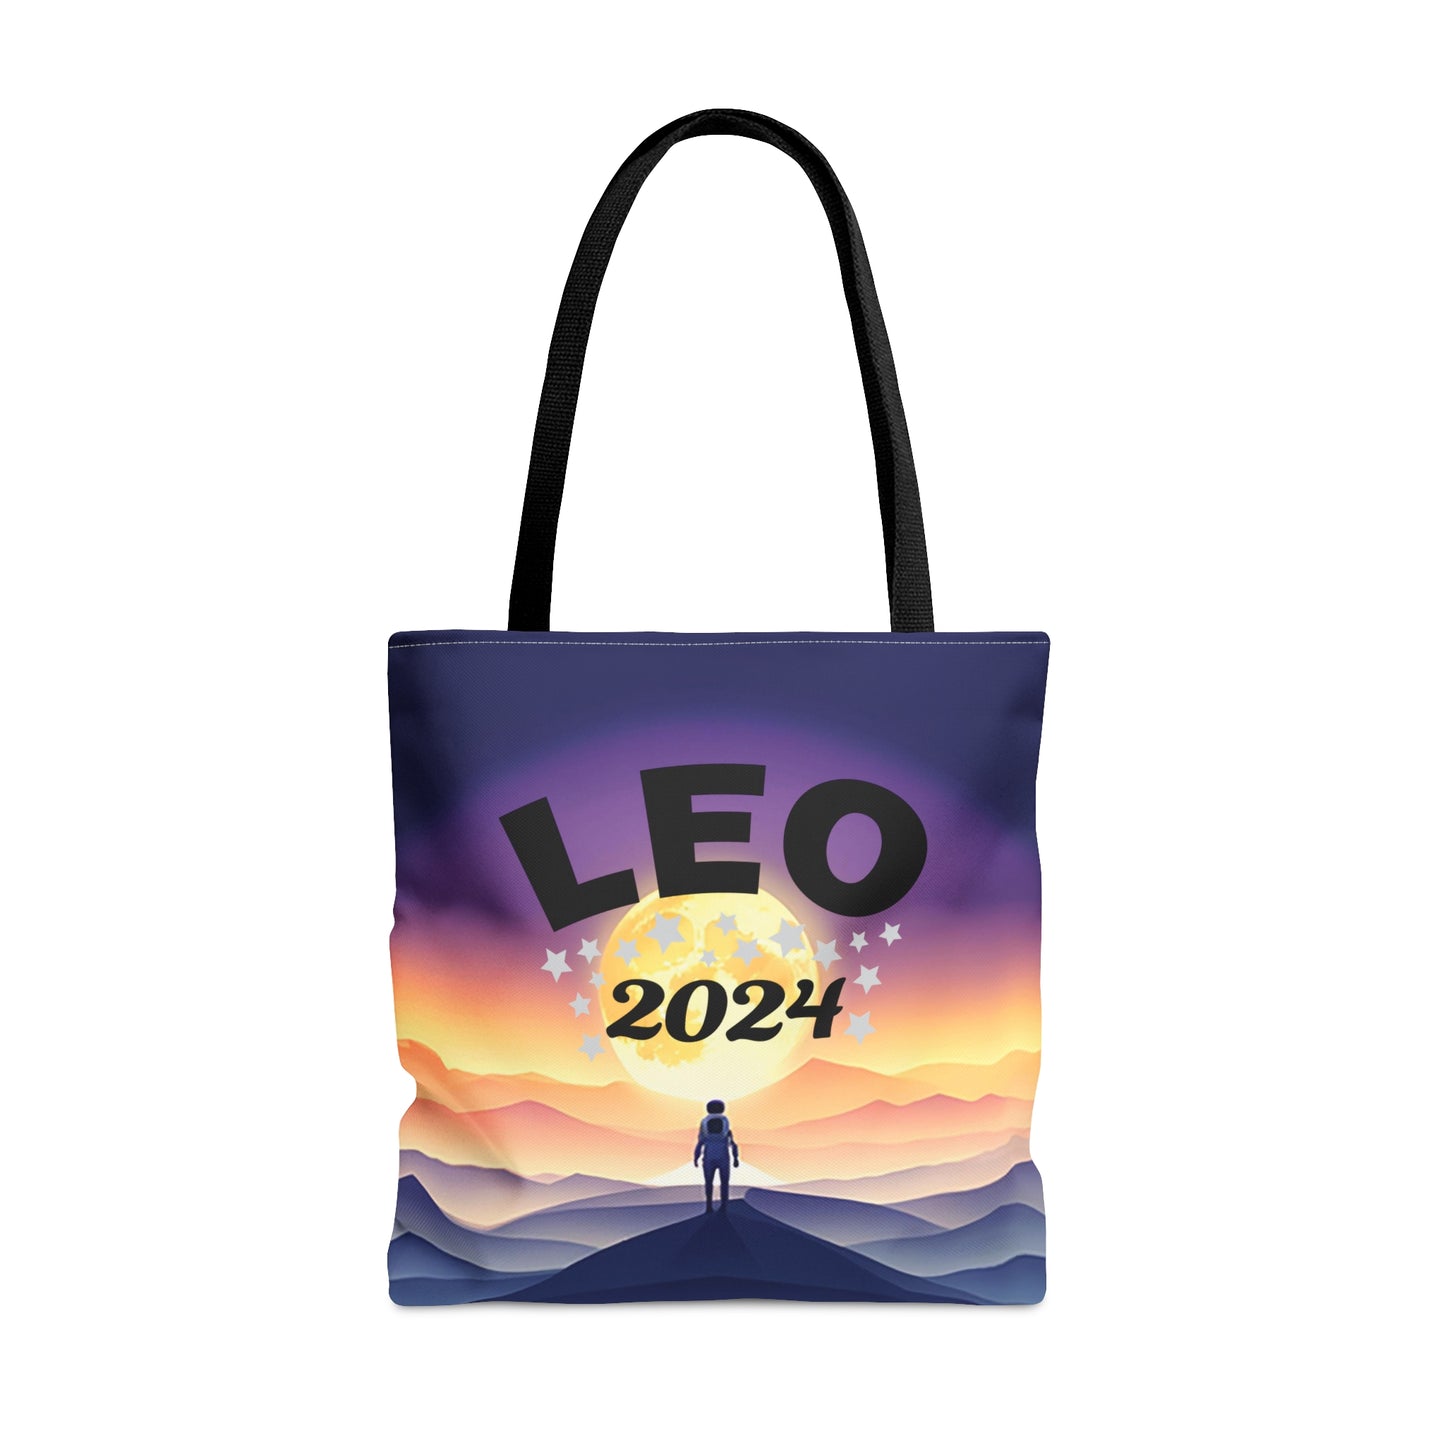 Leo 2024 Tote Bag